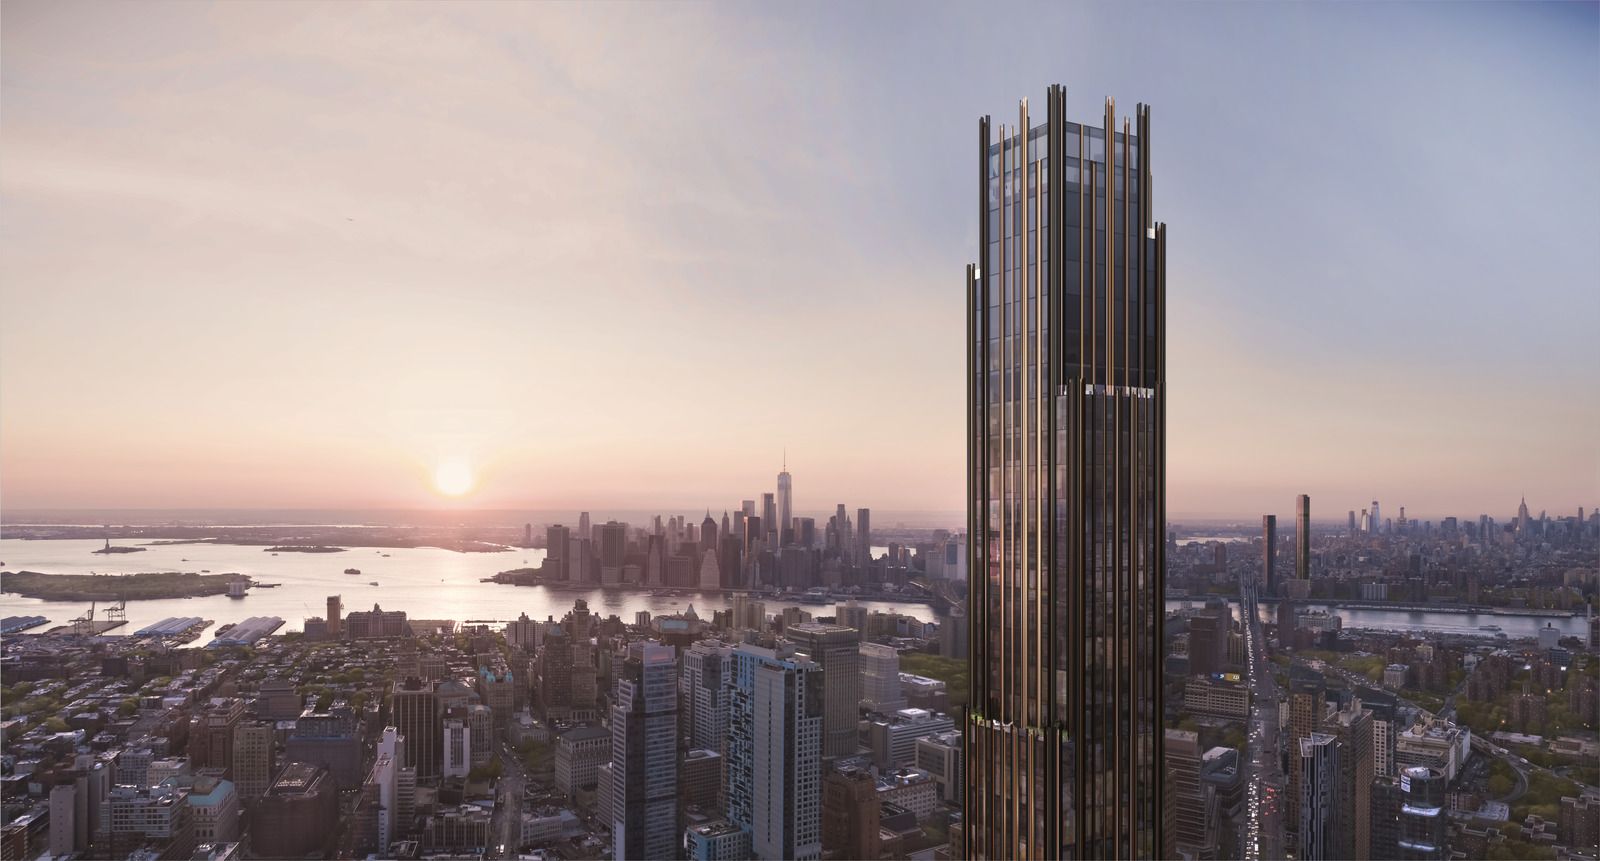 The Brooklyn Tower Brooklyn’s first supertall skyscraper